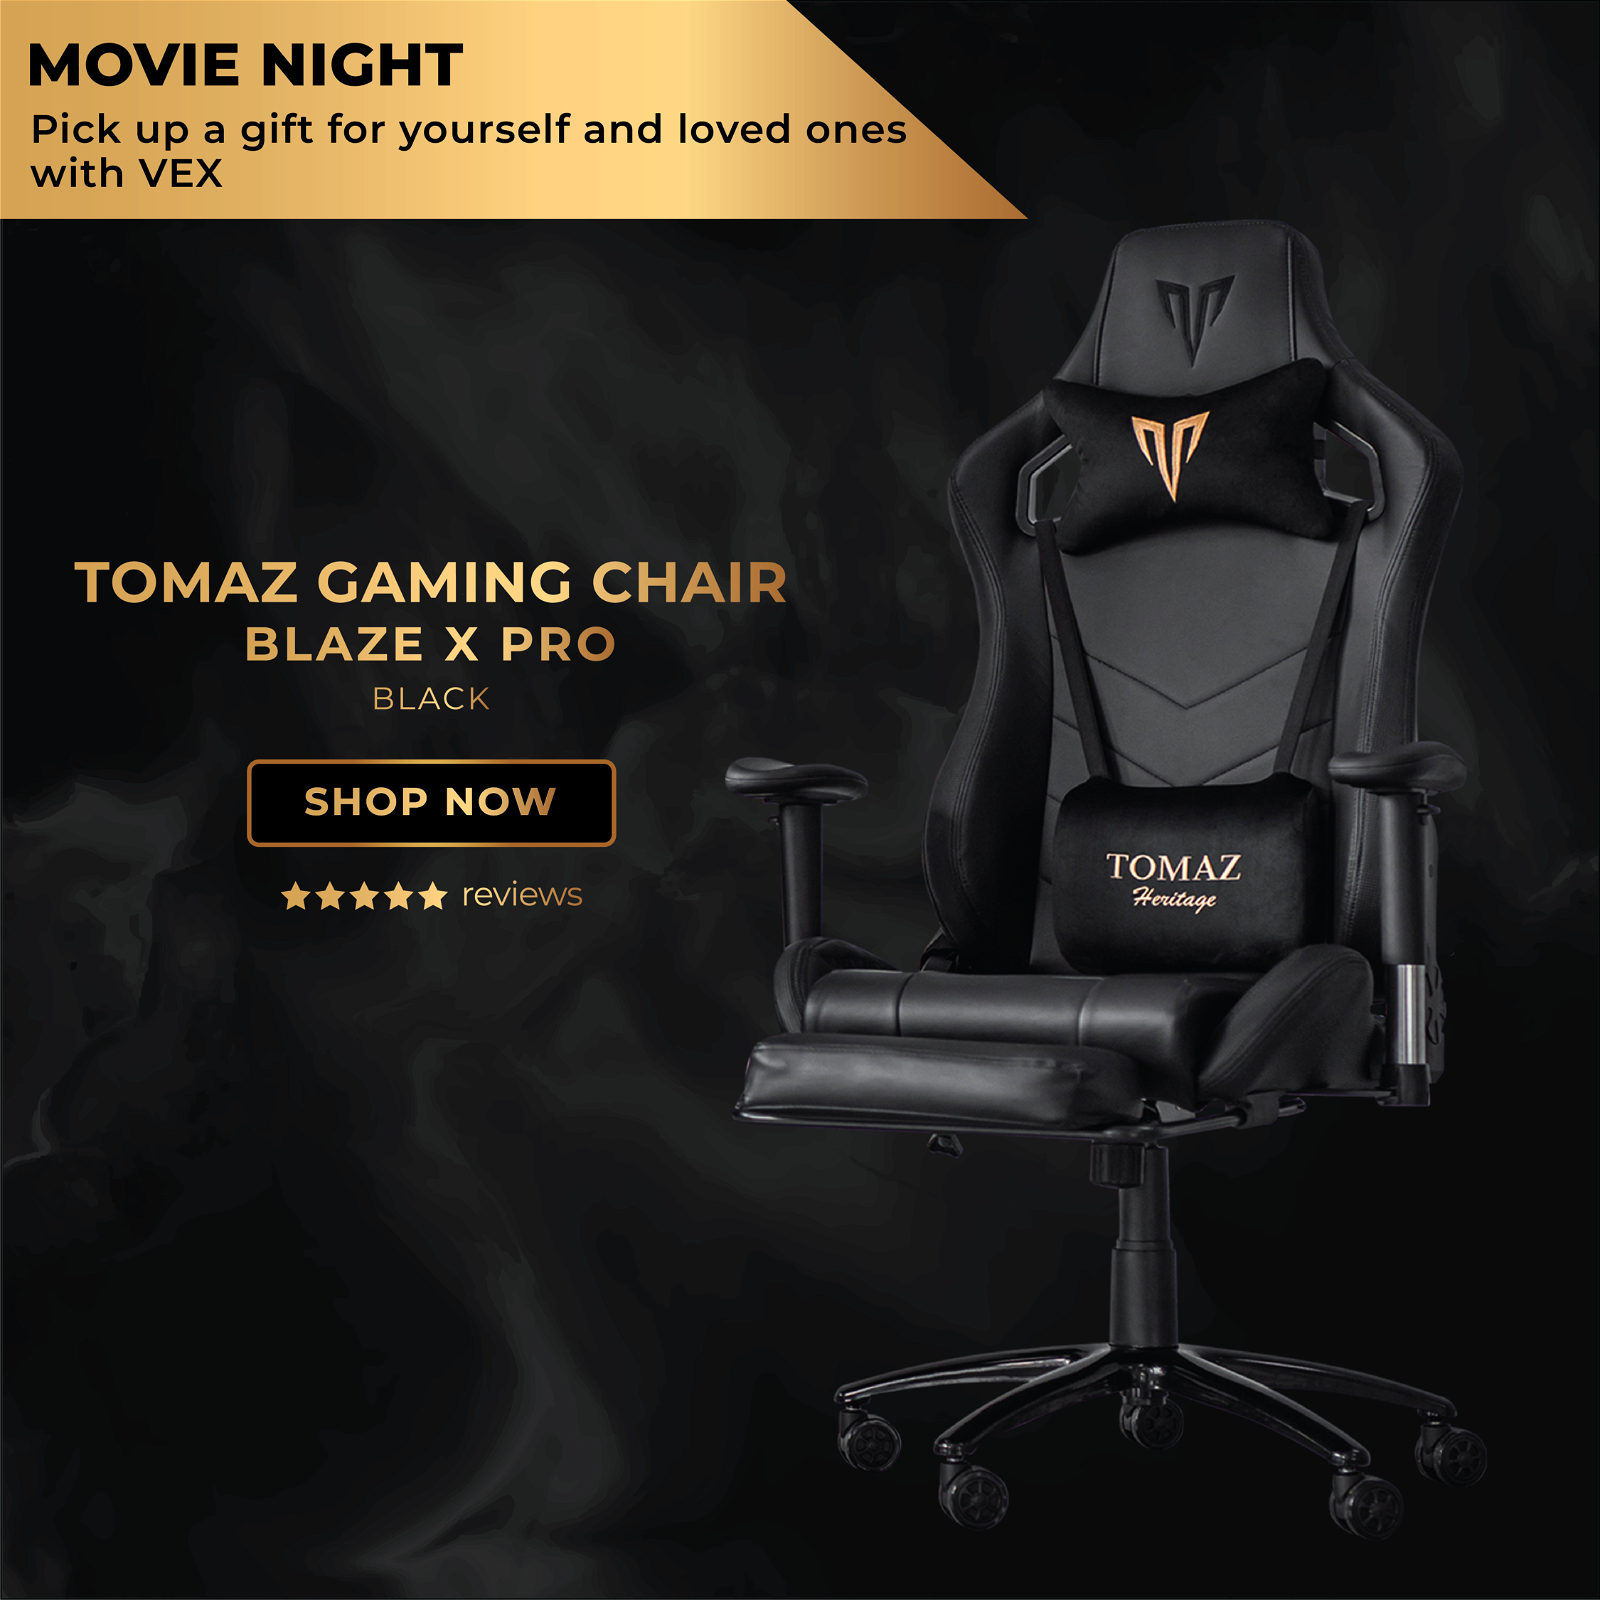 Tomaz Armor Gaming Table (Black)